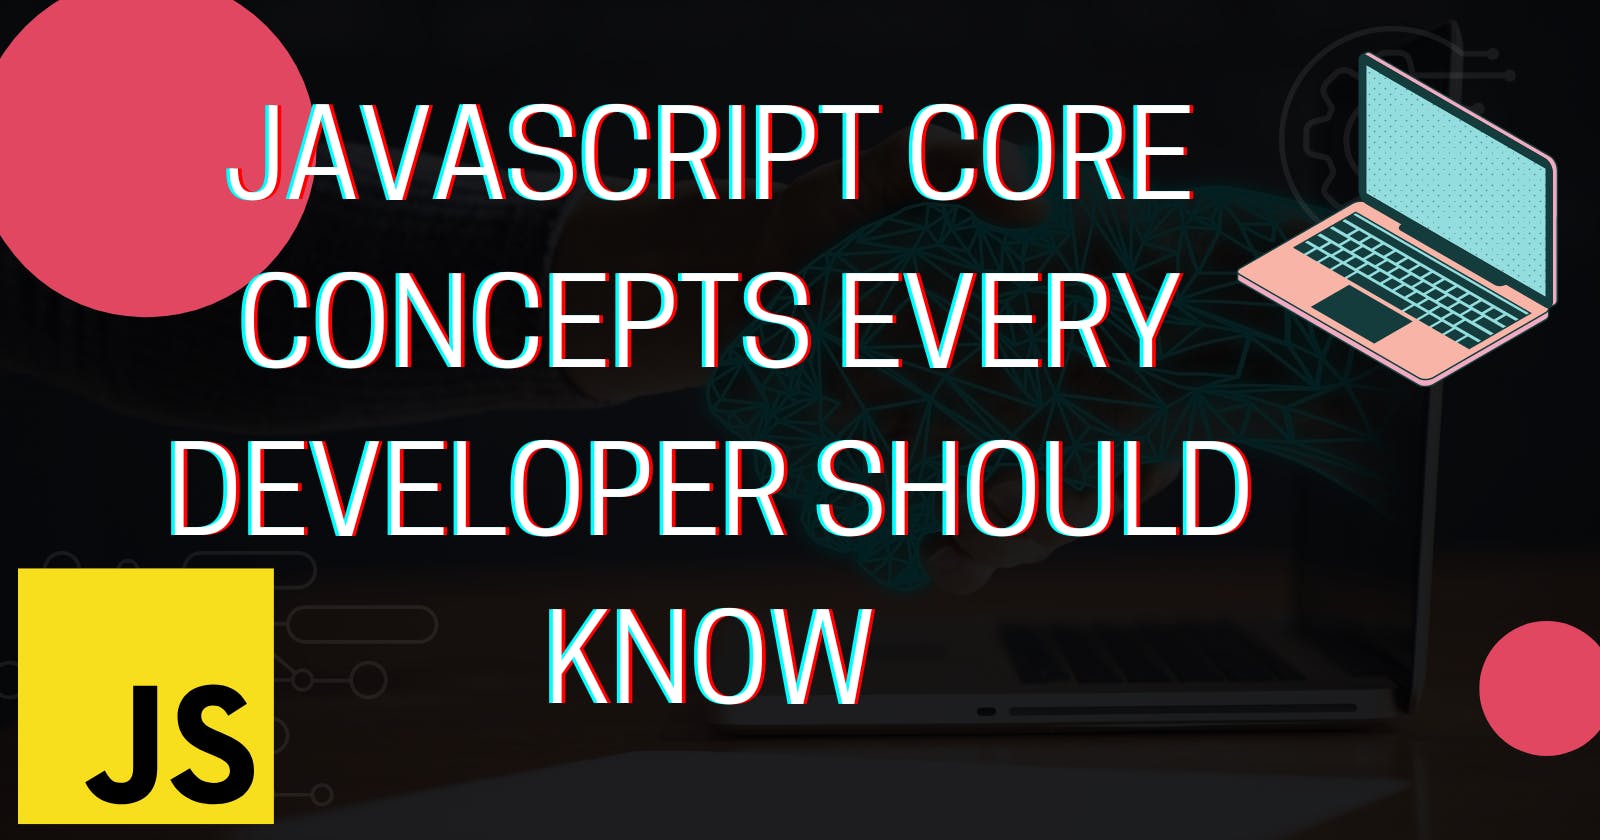 JavaScript core concepts Every Developer Should Know